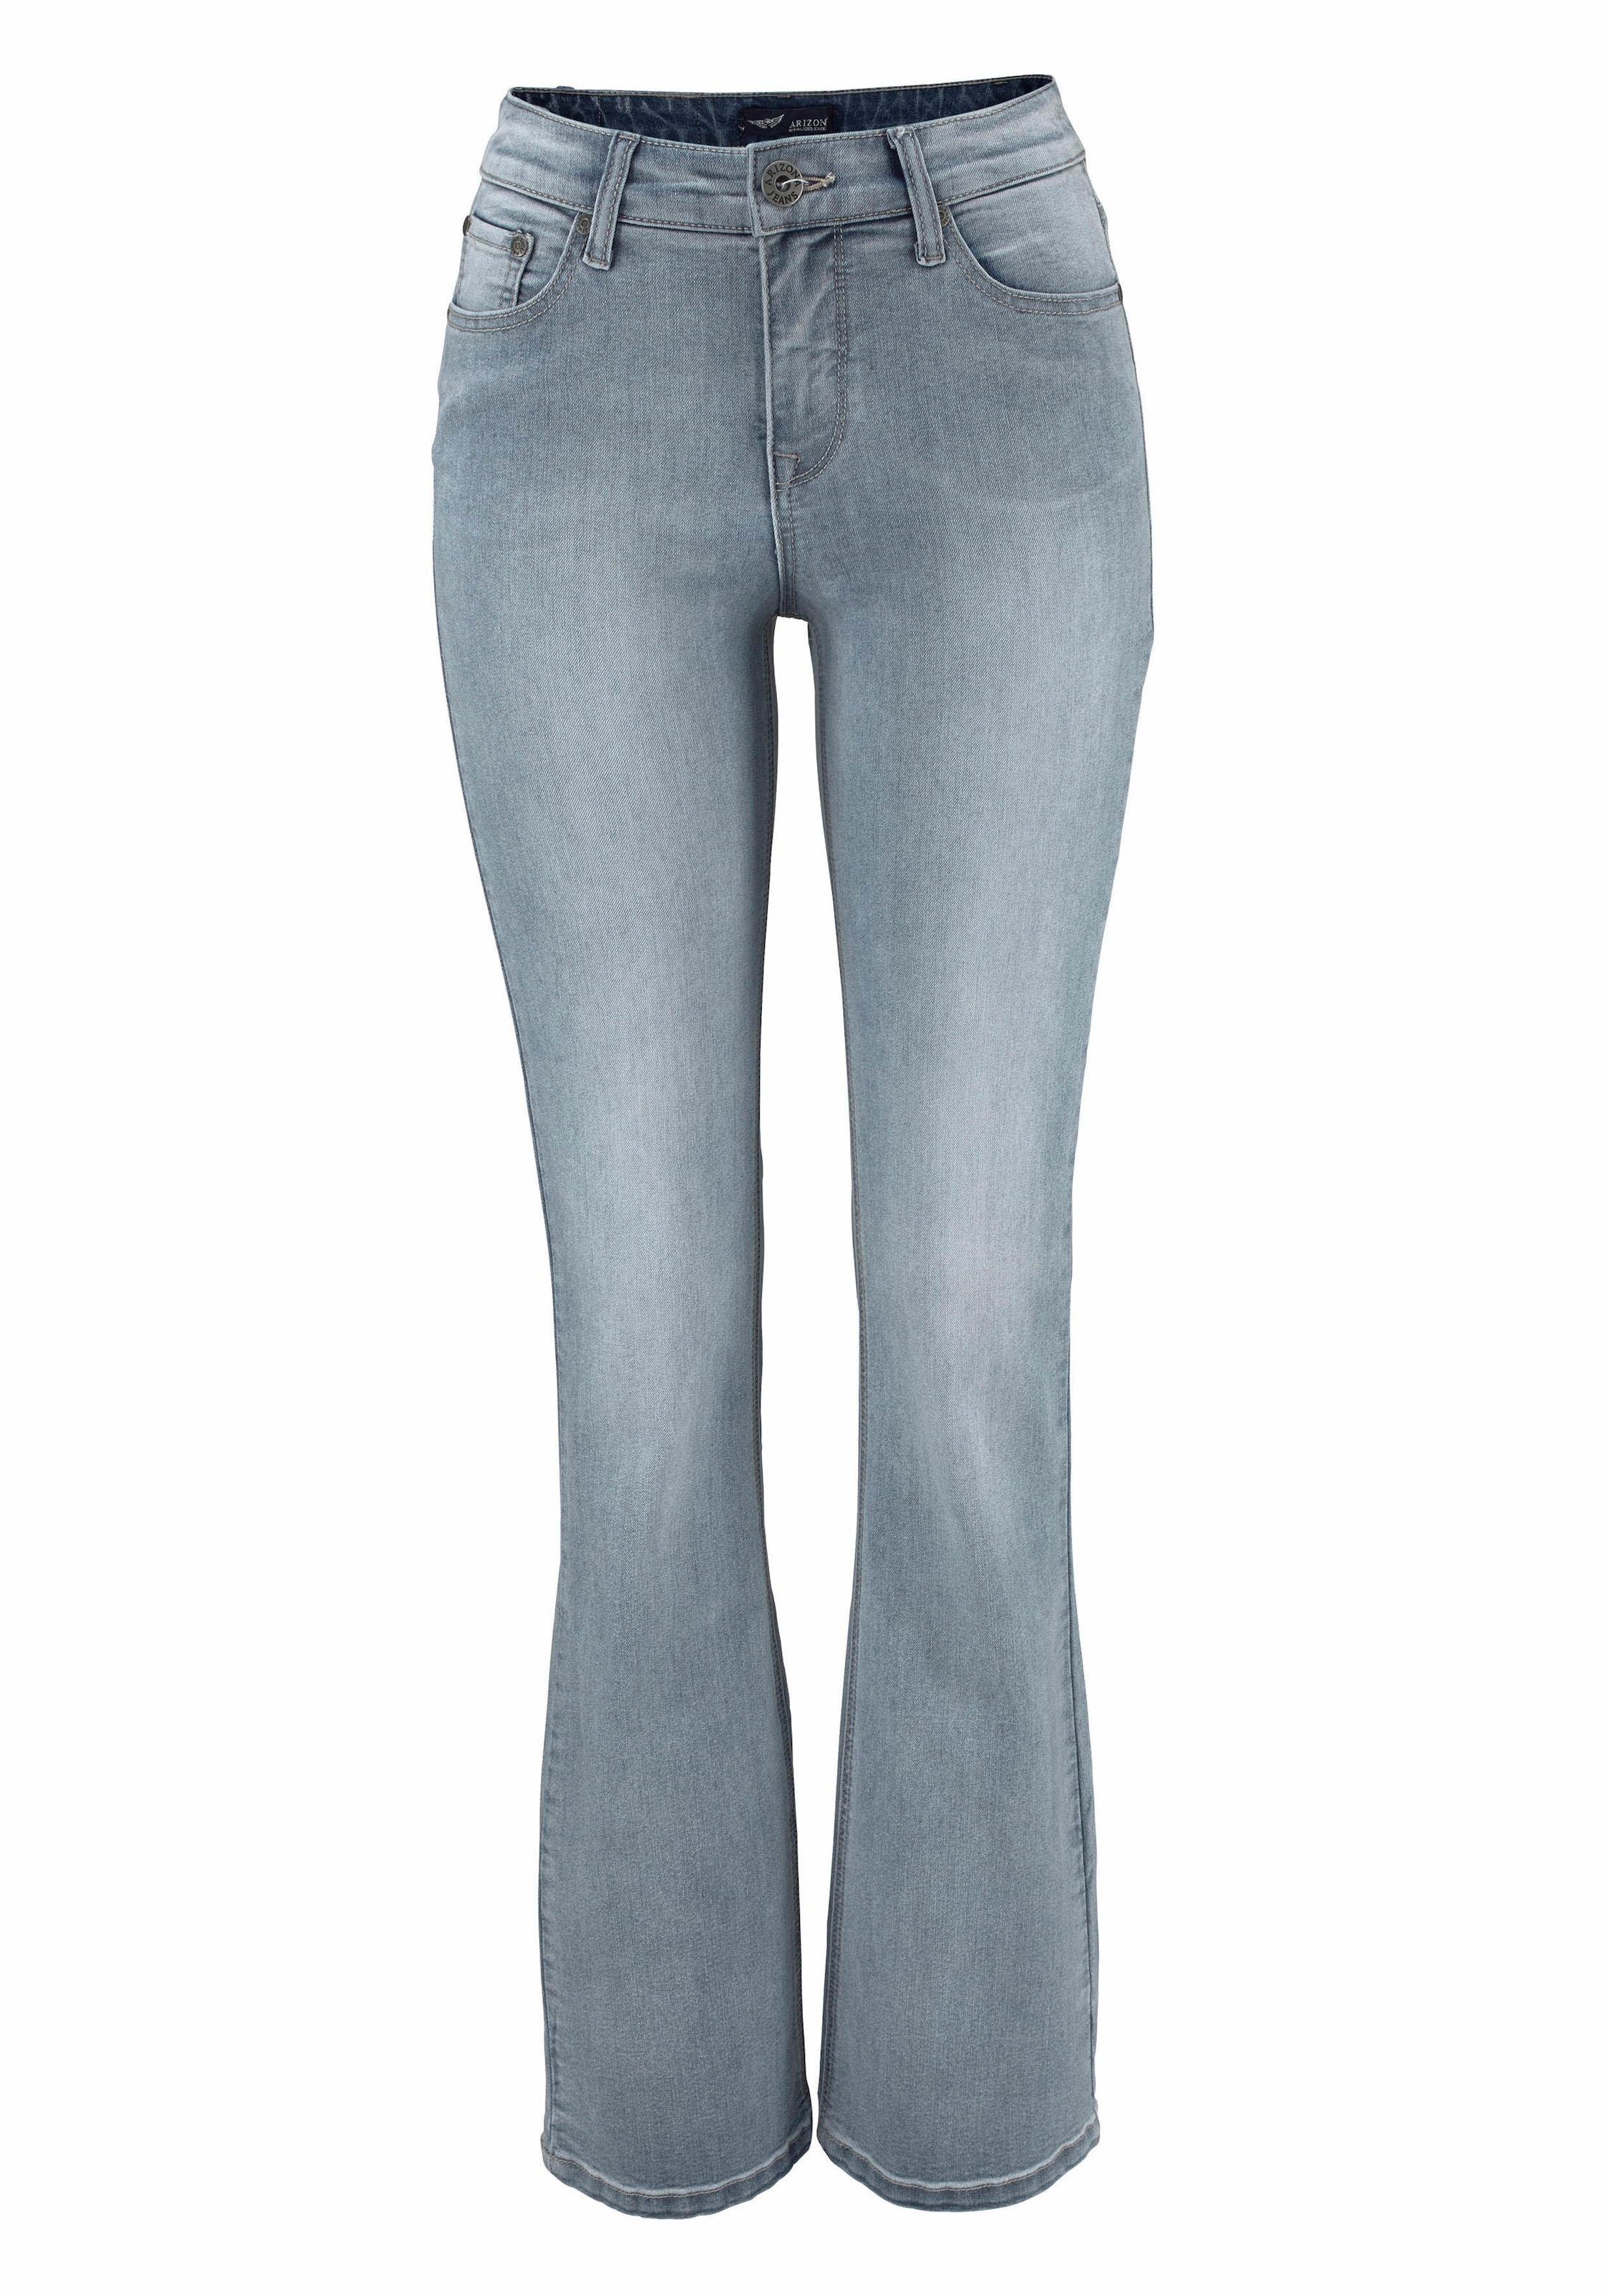 ♕ Arizona Bootcut-Jeans »Shaping«, High versandkostenfrei bestellen Waist